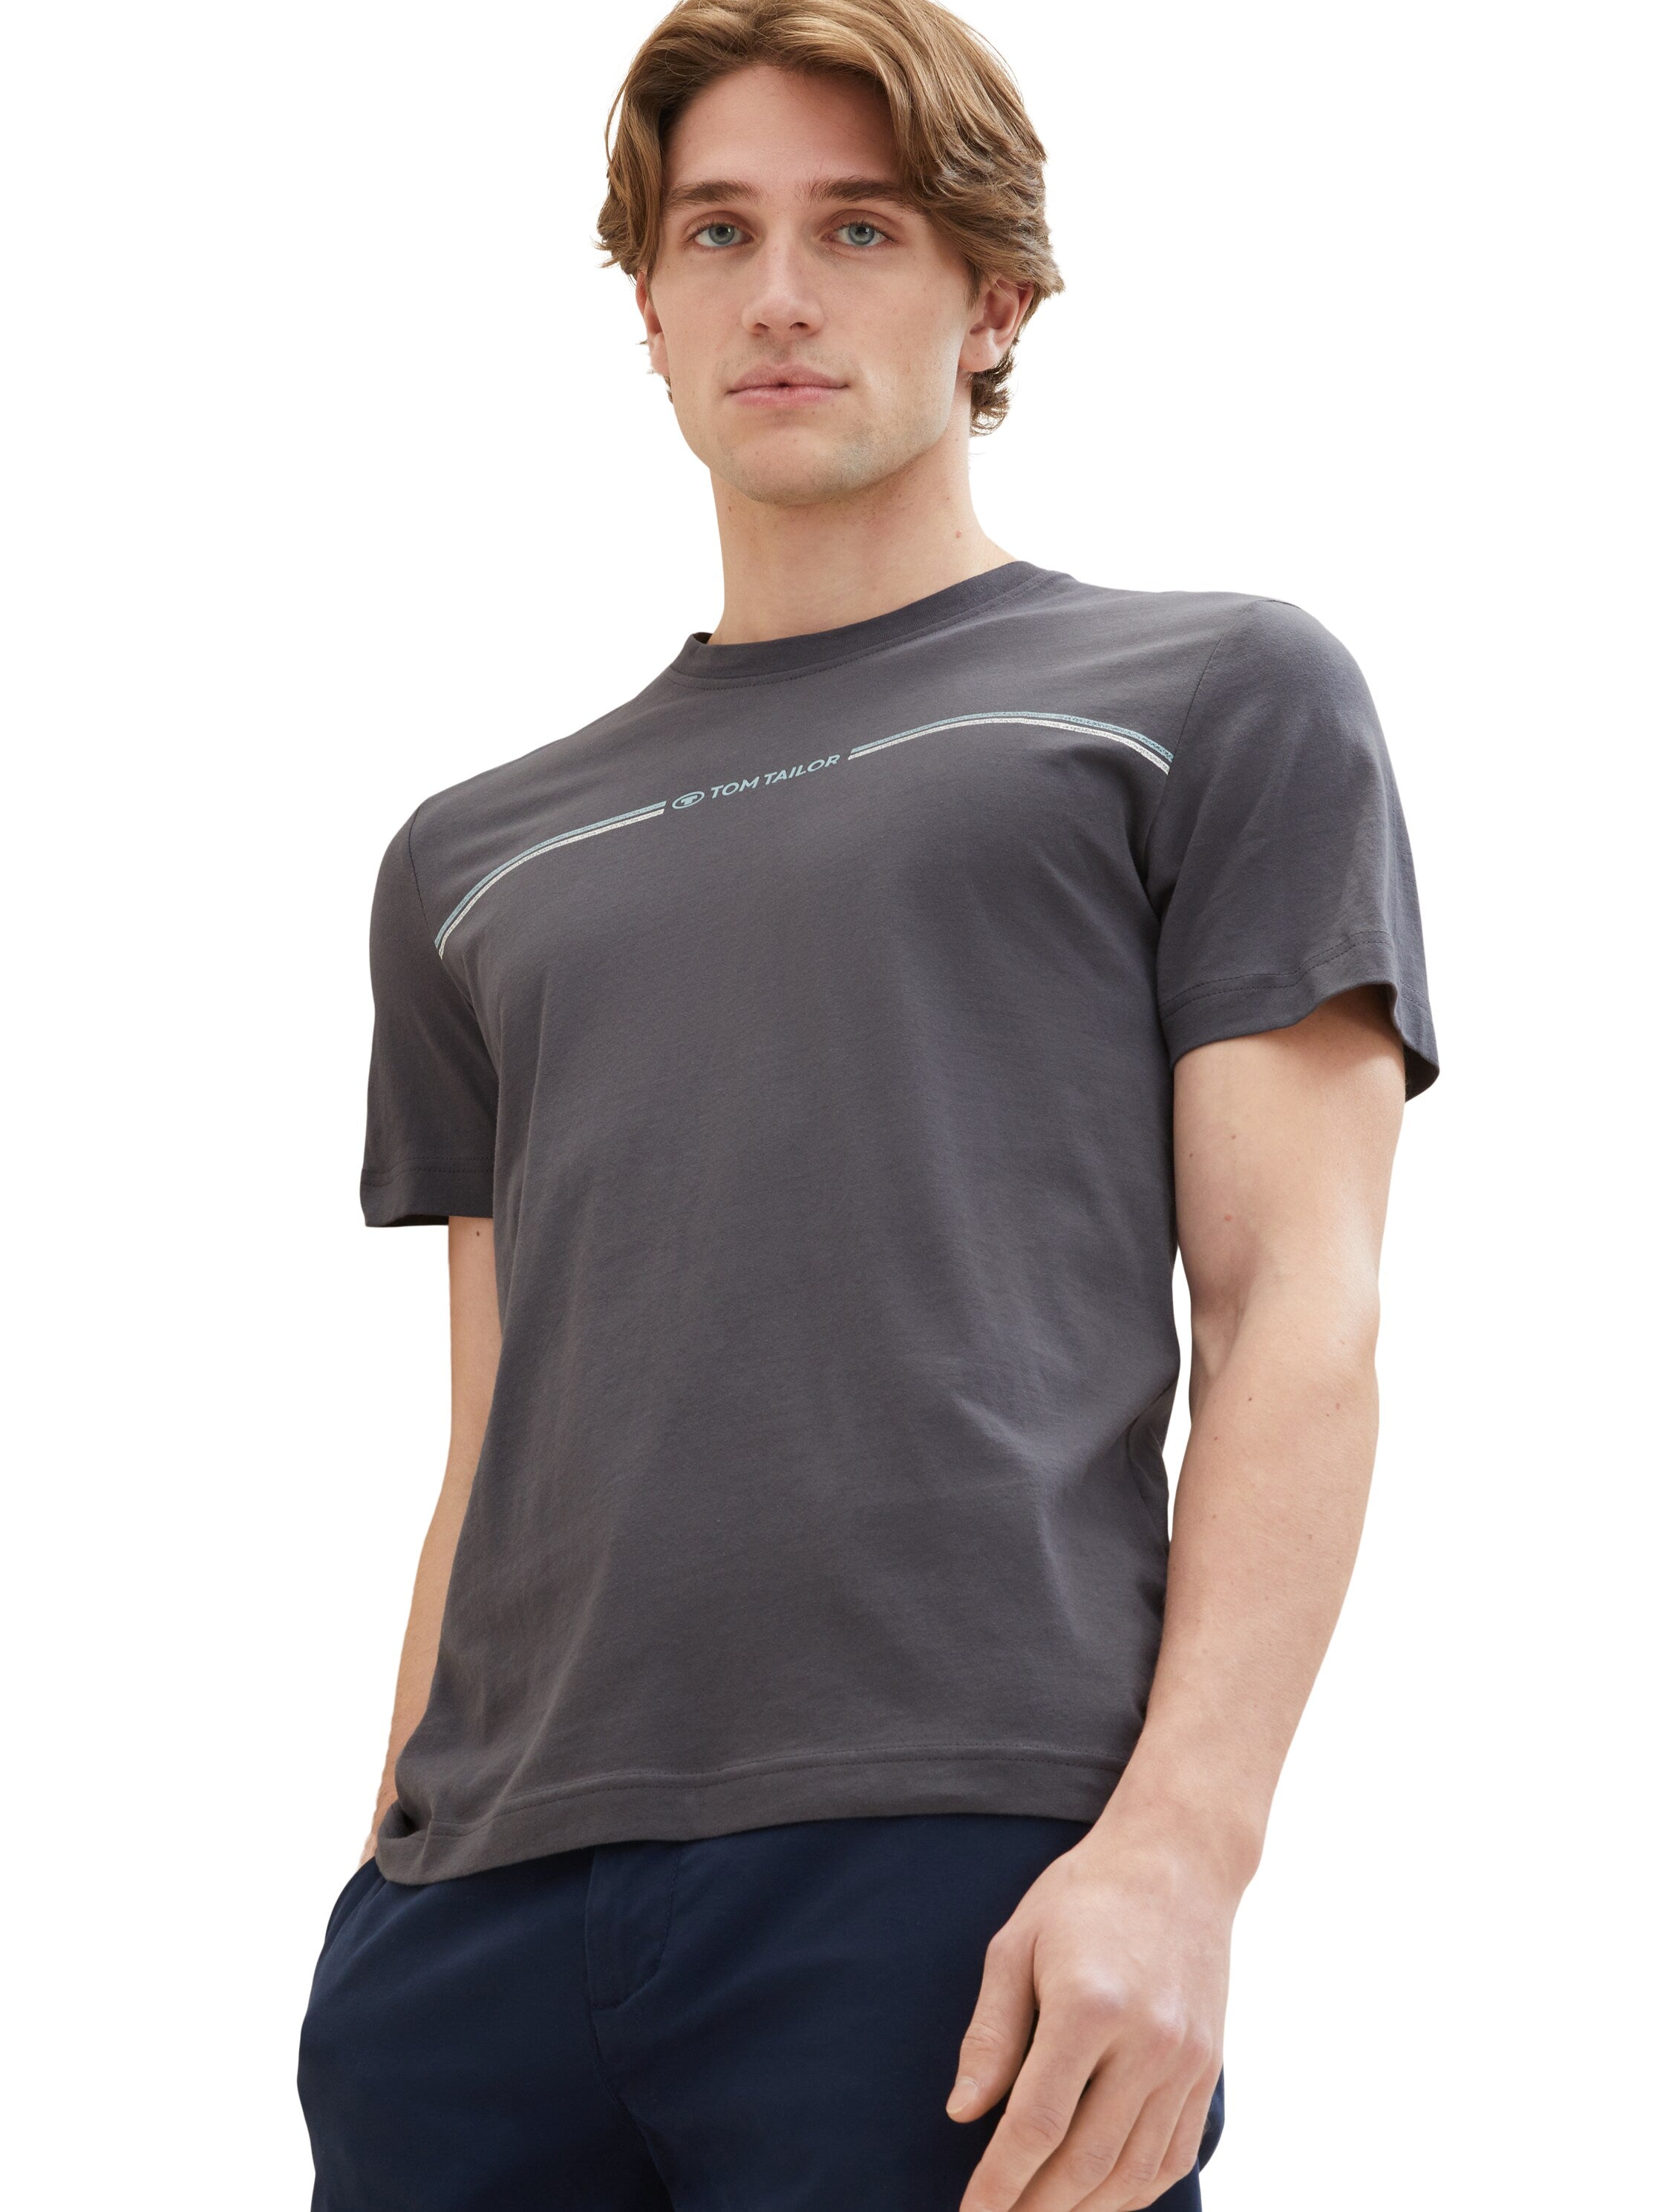 Tom Tailor Tarmac Grey Printed T-Shirt